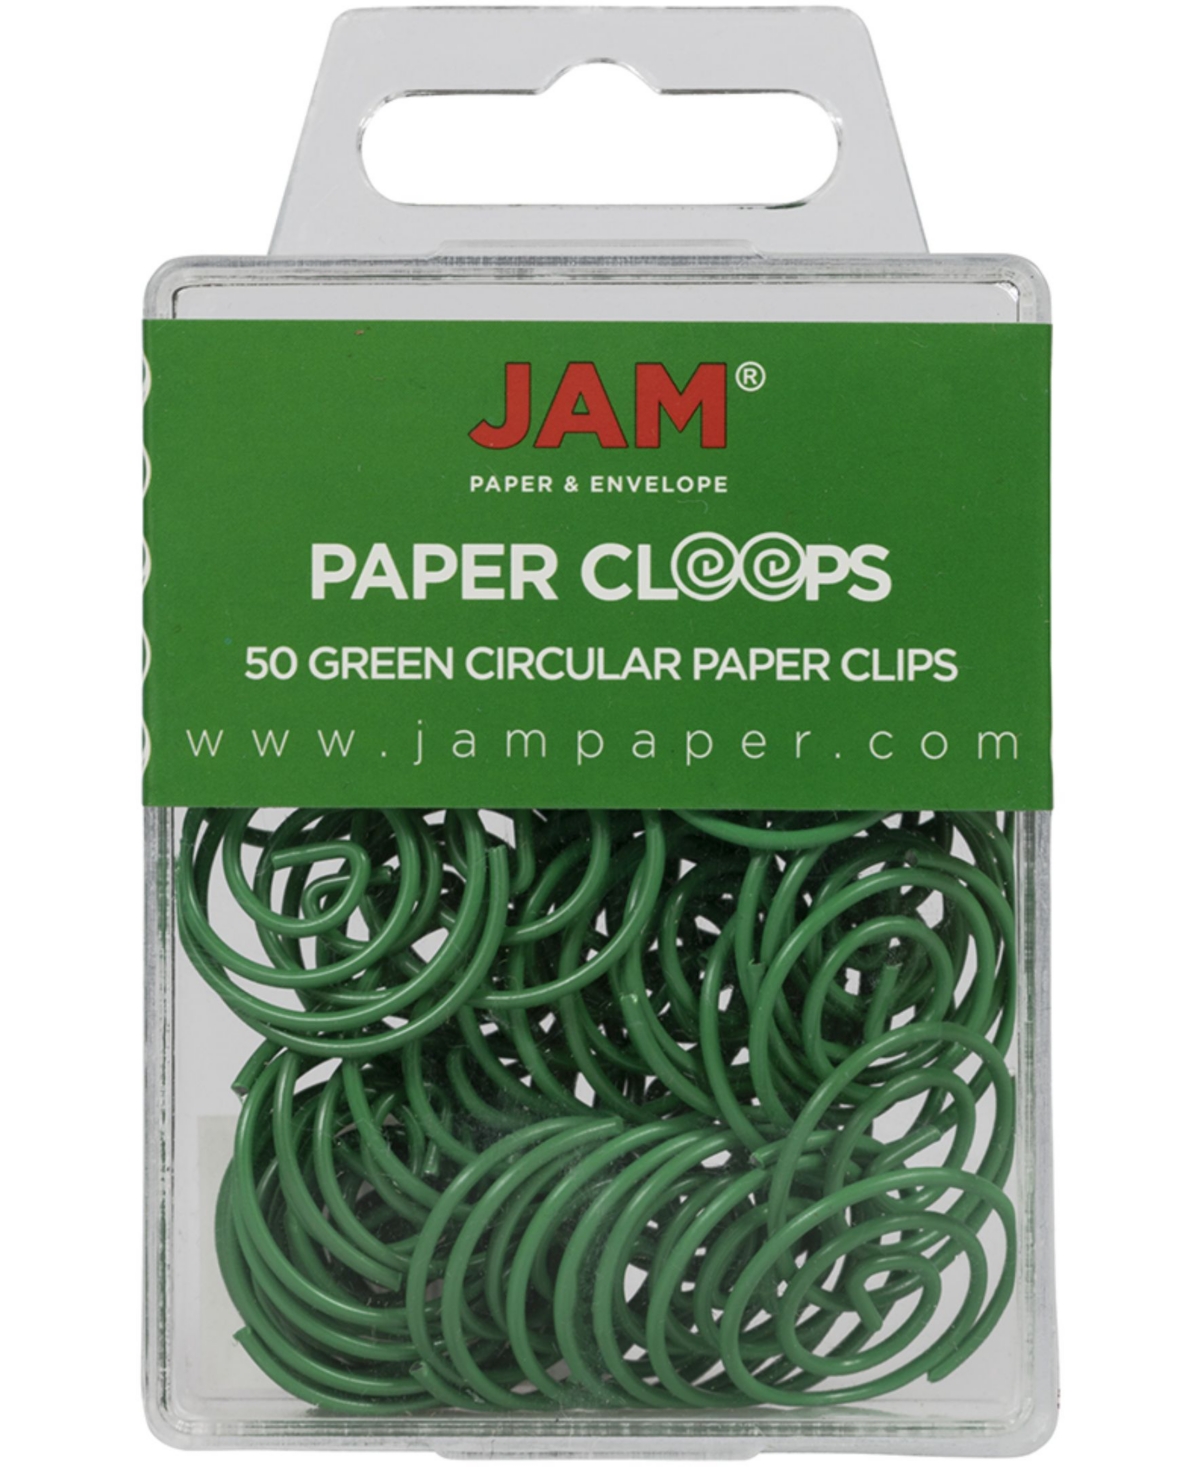 Jam Paper Circular Paper Clips In Green